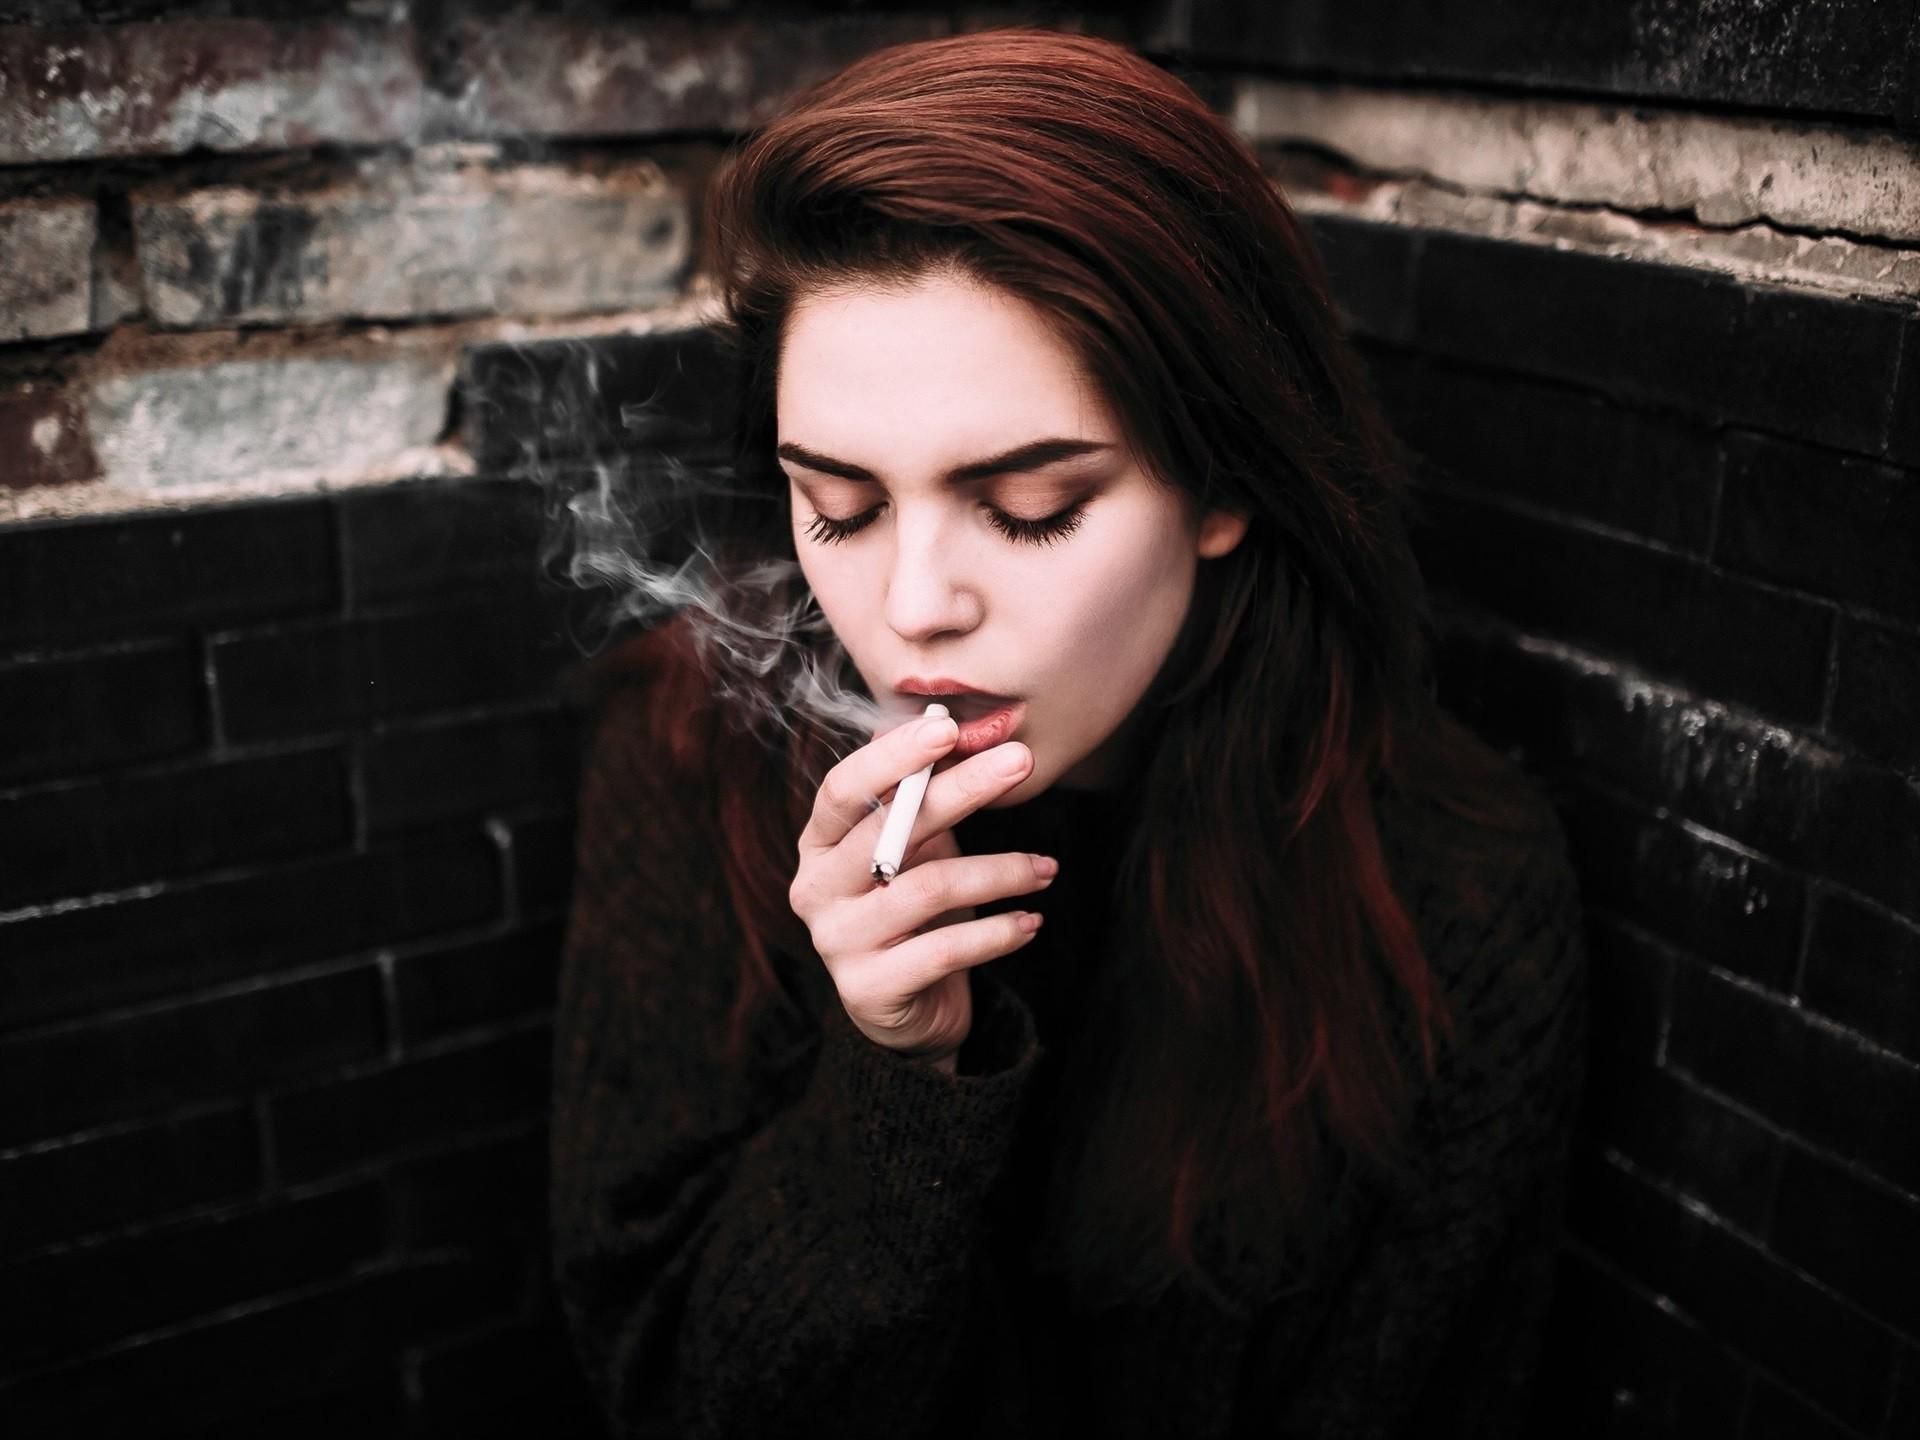 Women Smoking Cigarettes Hd Wallpapers Wallpaper Cave